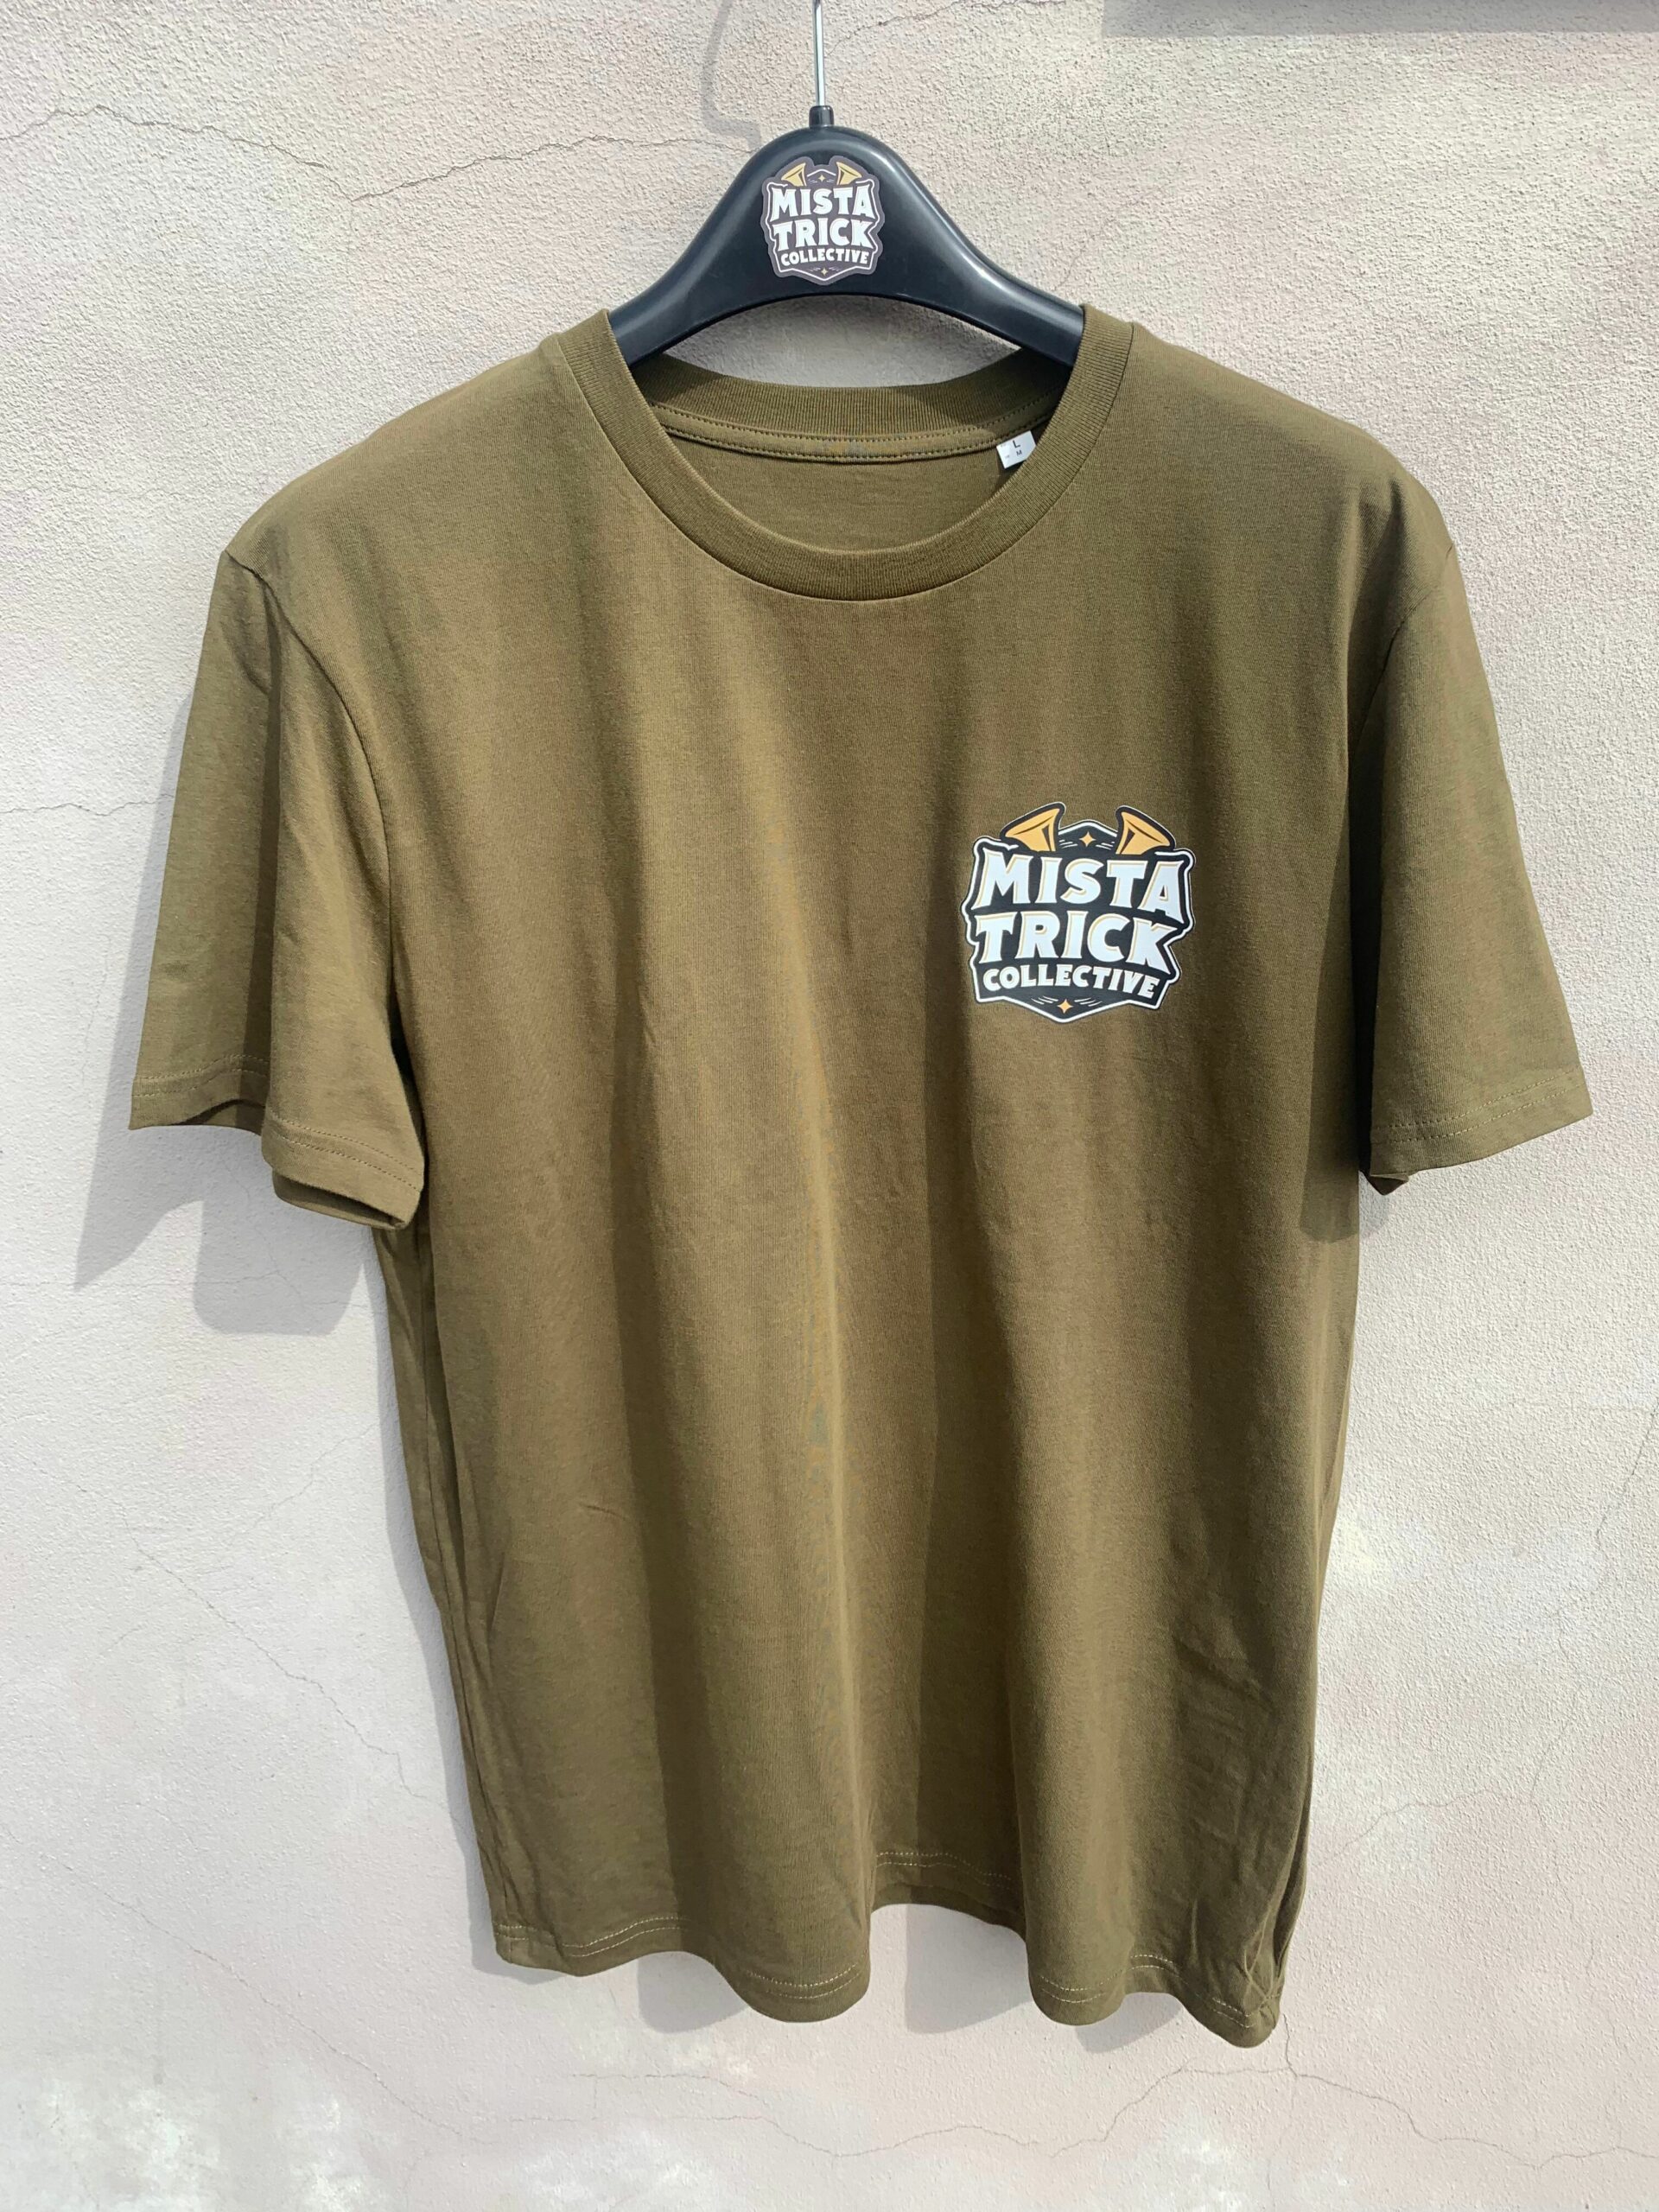 Mista Trick Collective T-Shirt Size: Medium (Khaki)